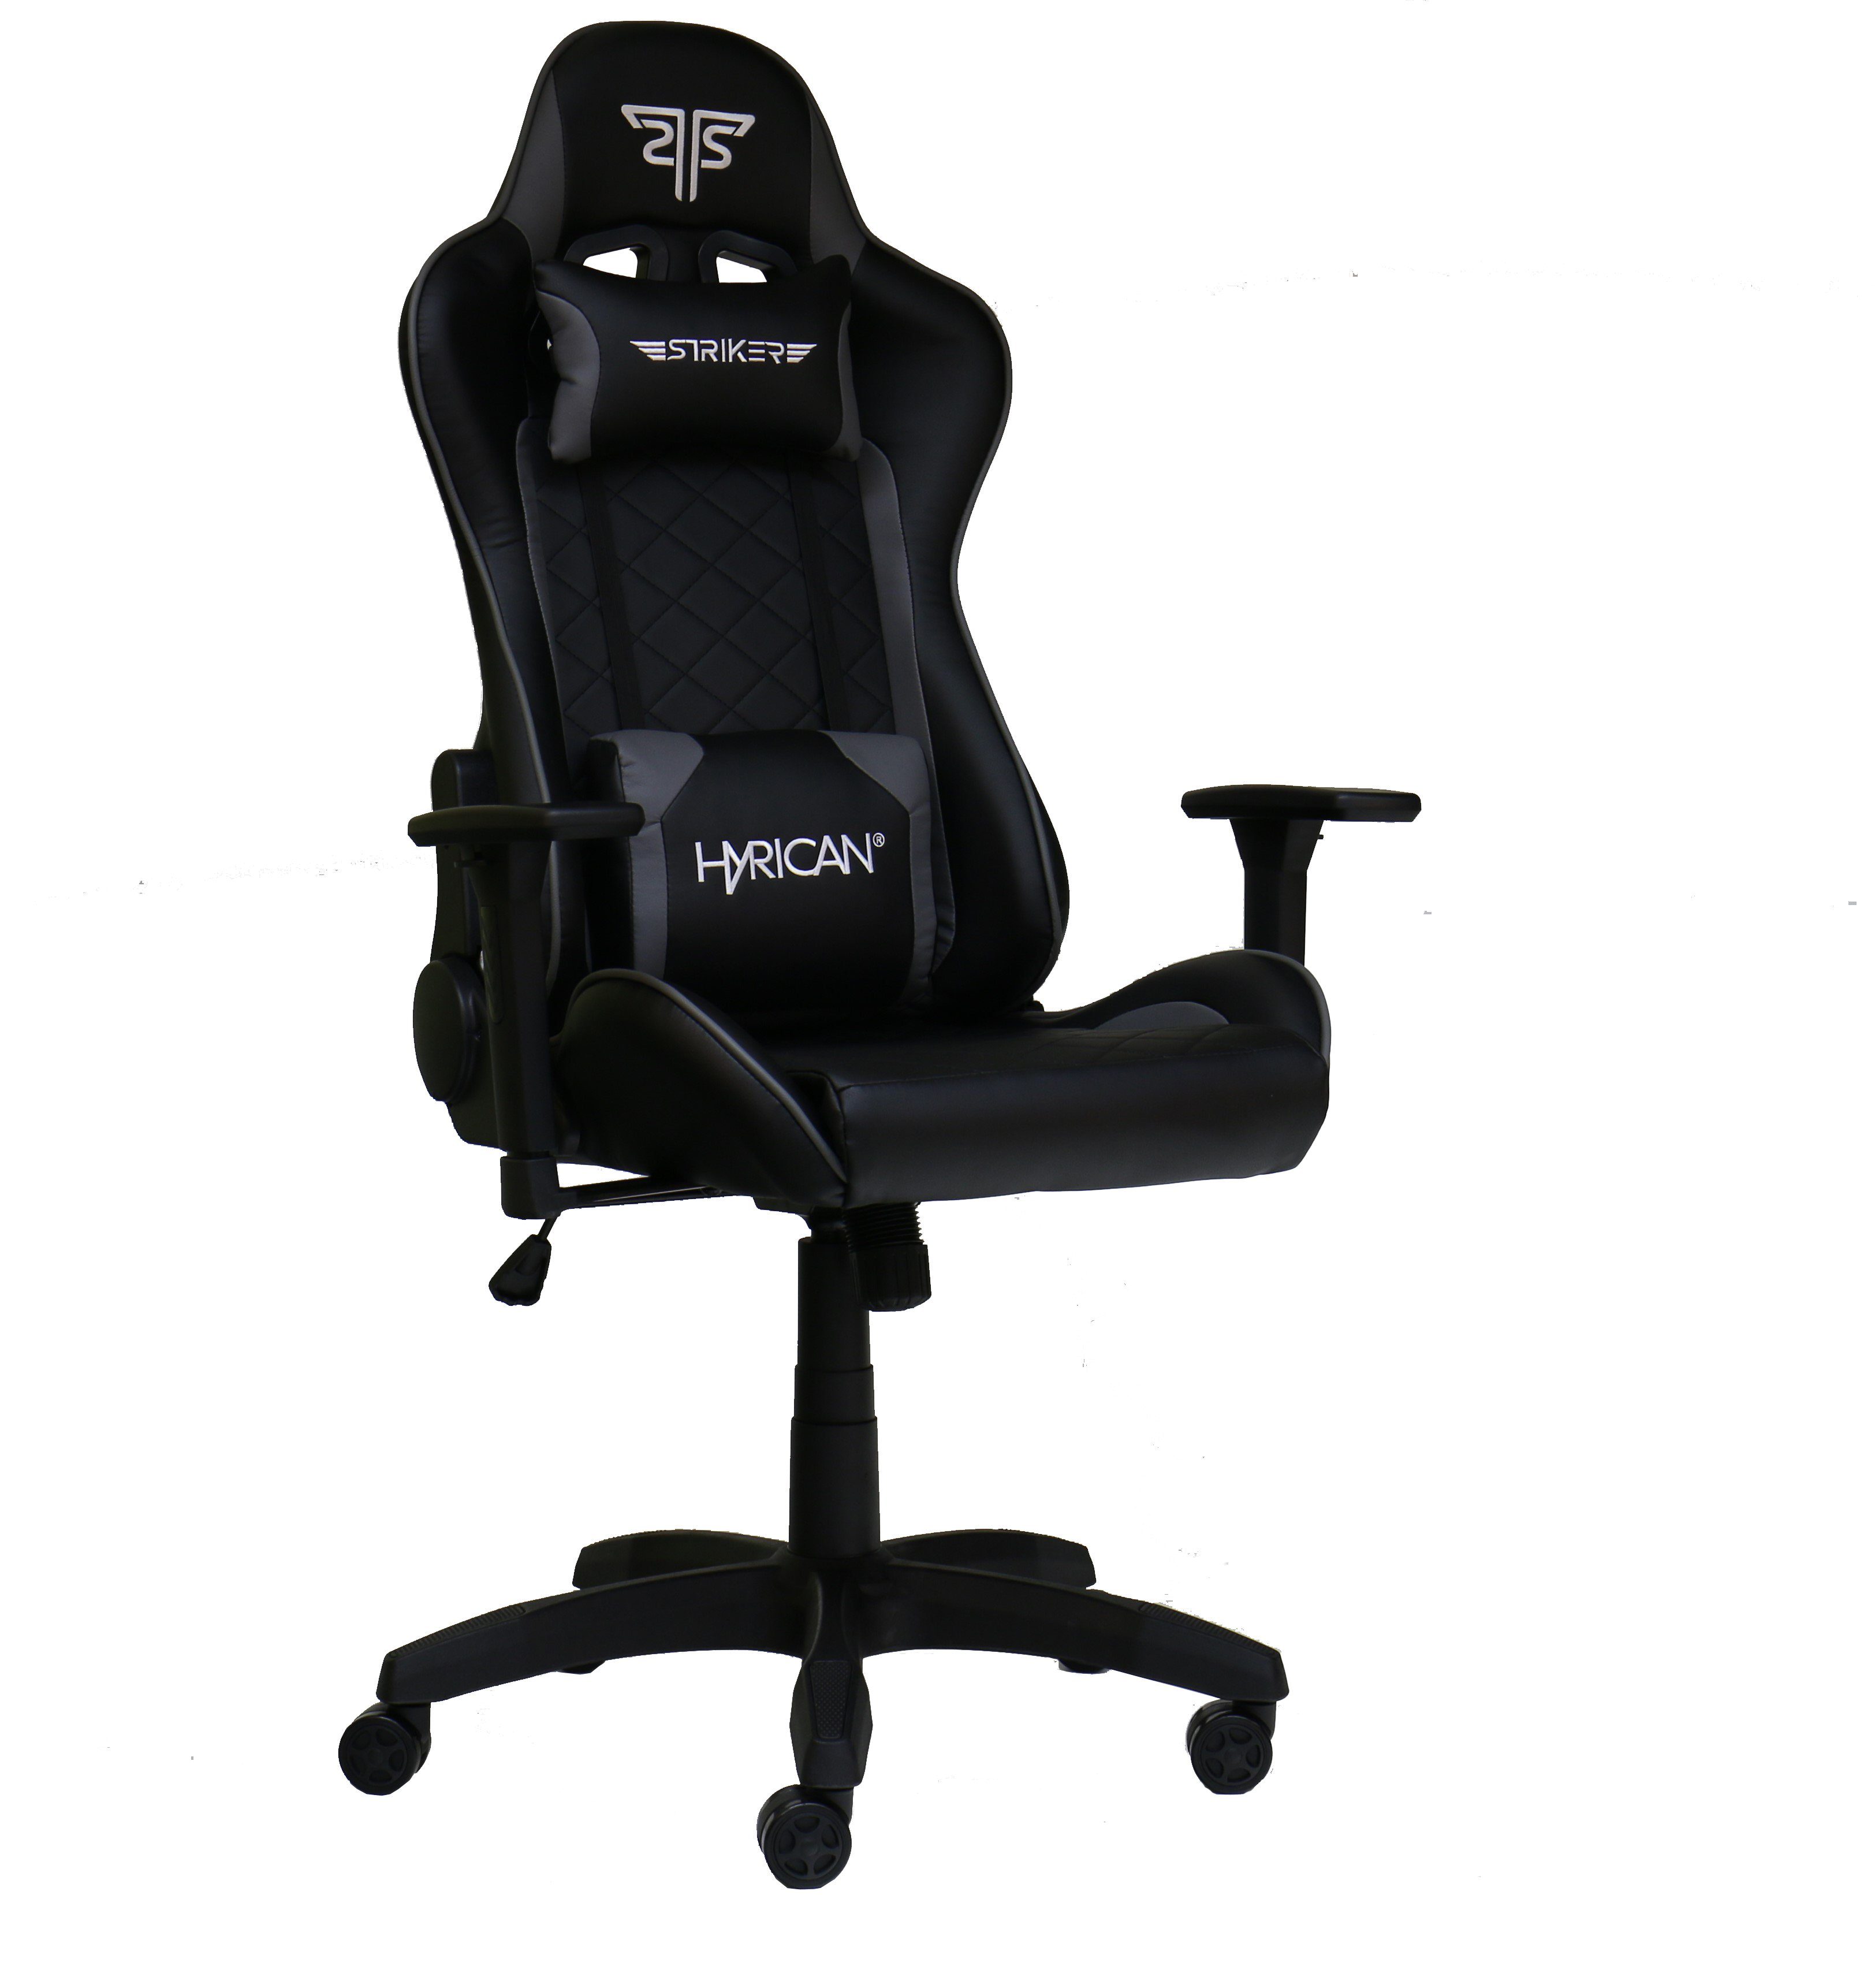 "Comander" Gamingstuhl, 3D-Armlehnen Gaming-Stuhl ergonomischer Gaming-Stuhl Striker Hyrican